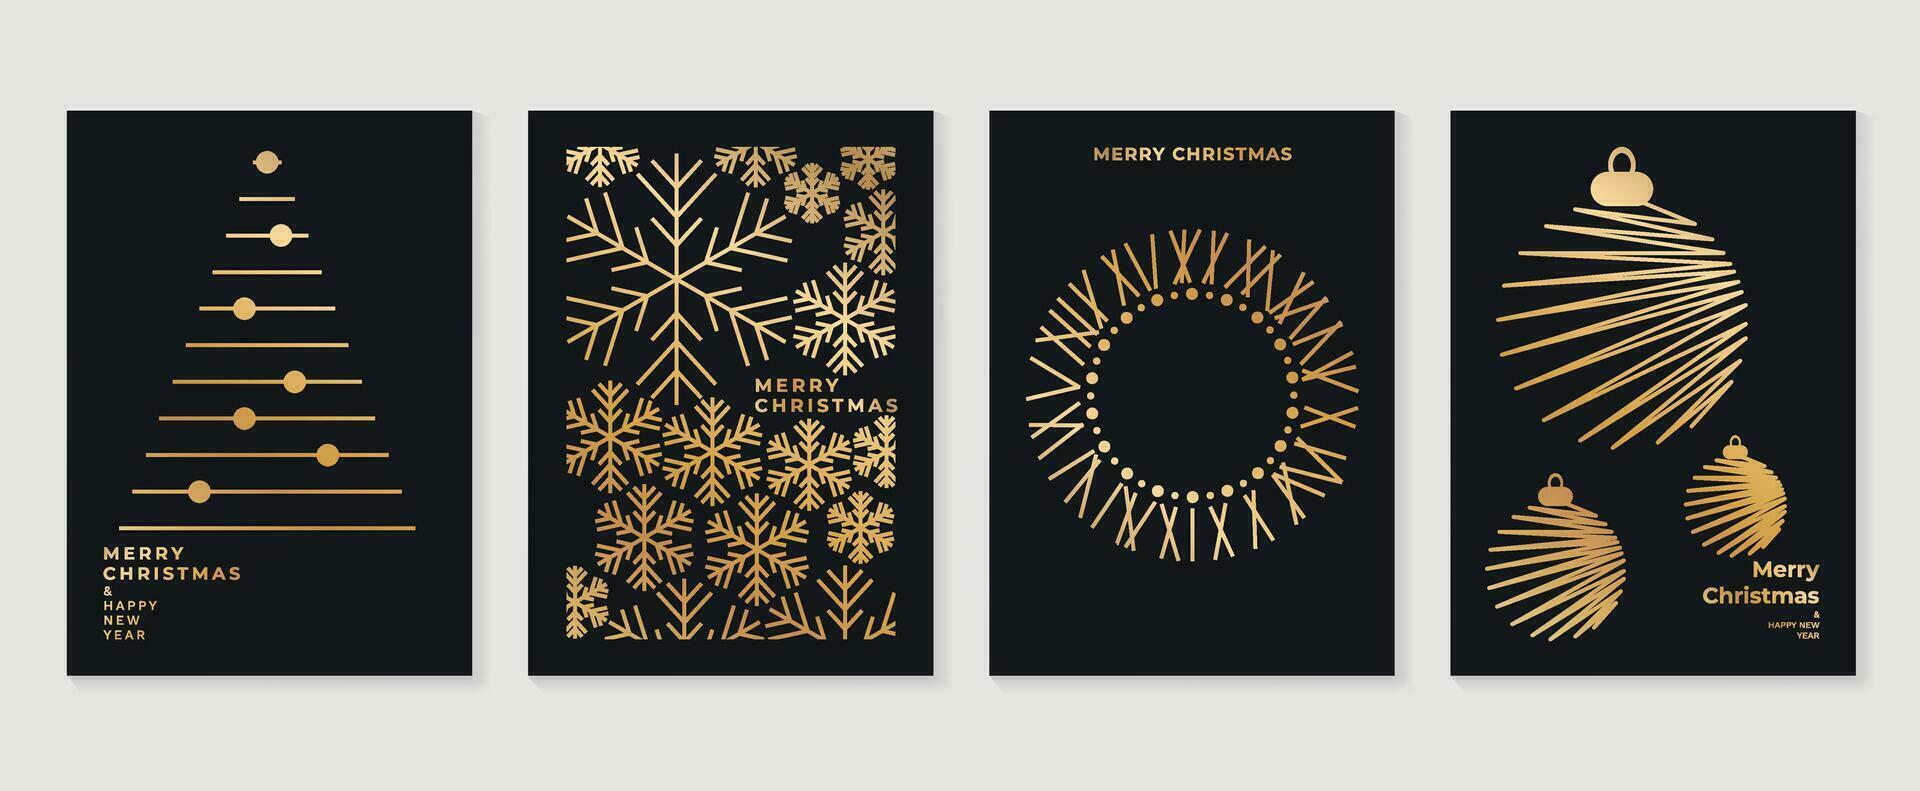 Luxury christmas invitation card art deco design vector. Christmas tree, bauble ball, snowflake, wreath line art on dark background. Design illustration for cover, poster, wallpaper. vector